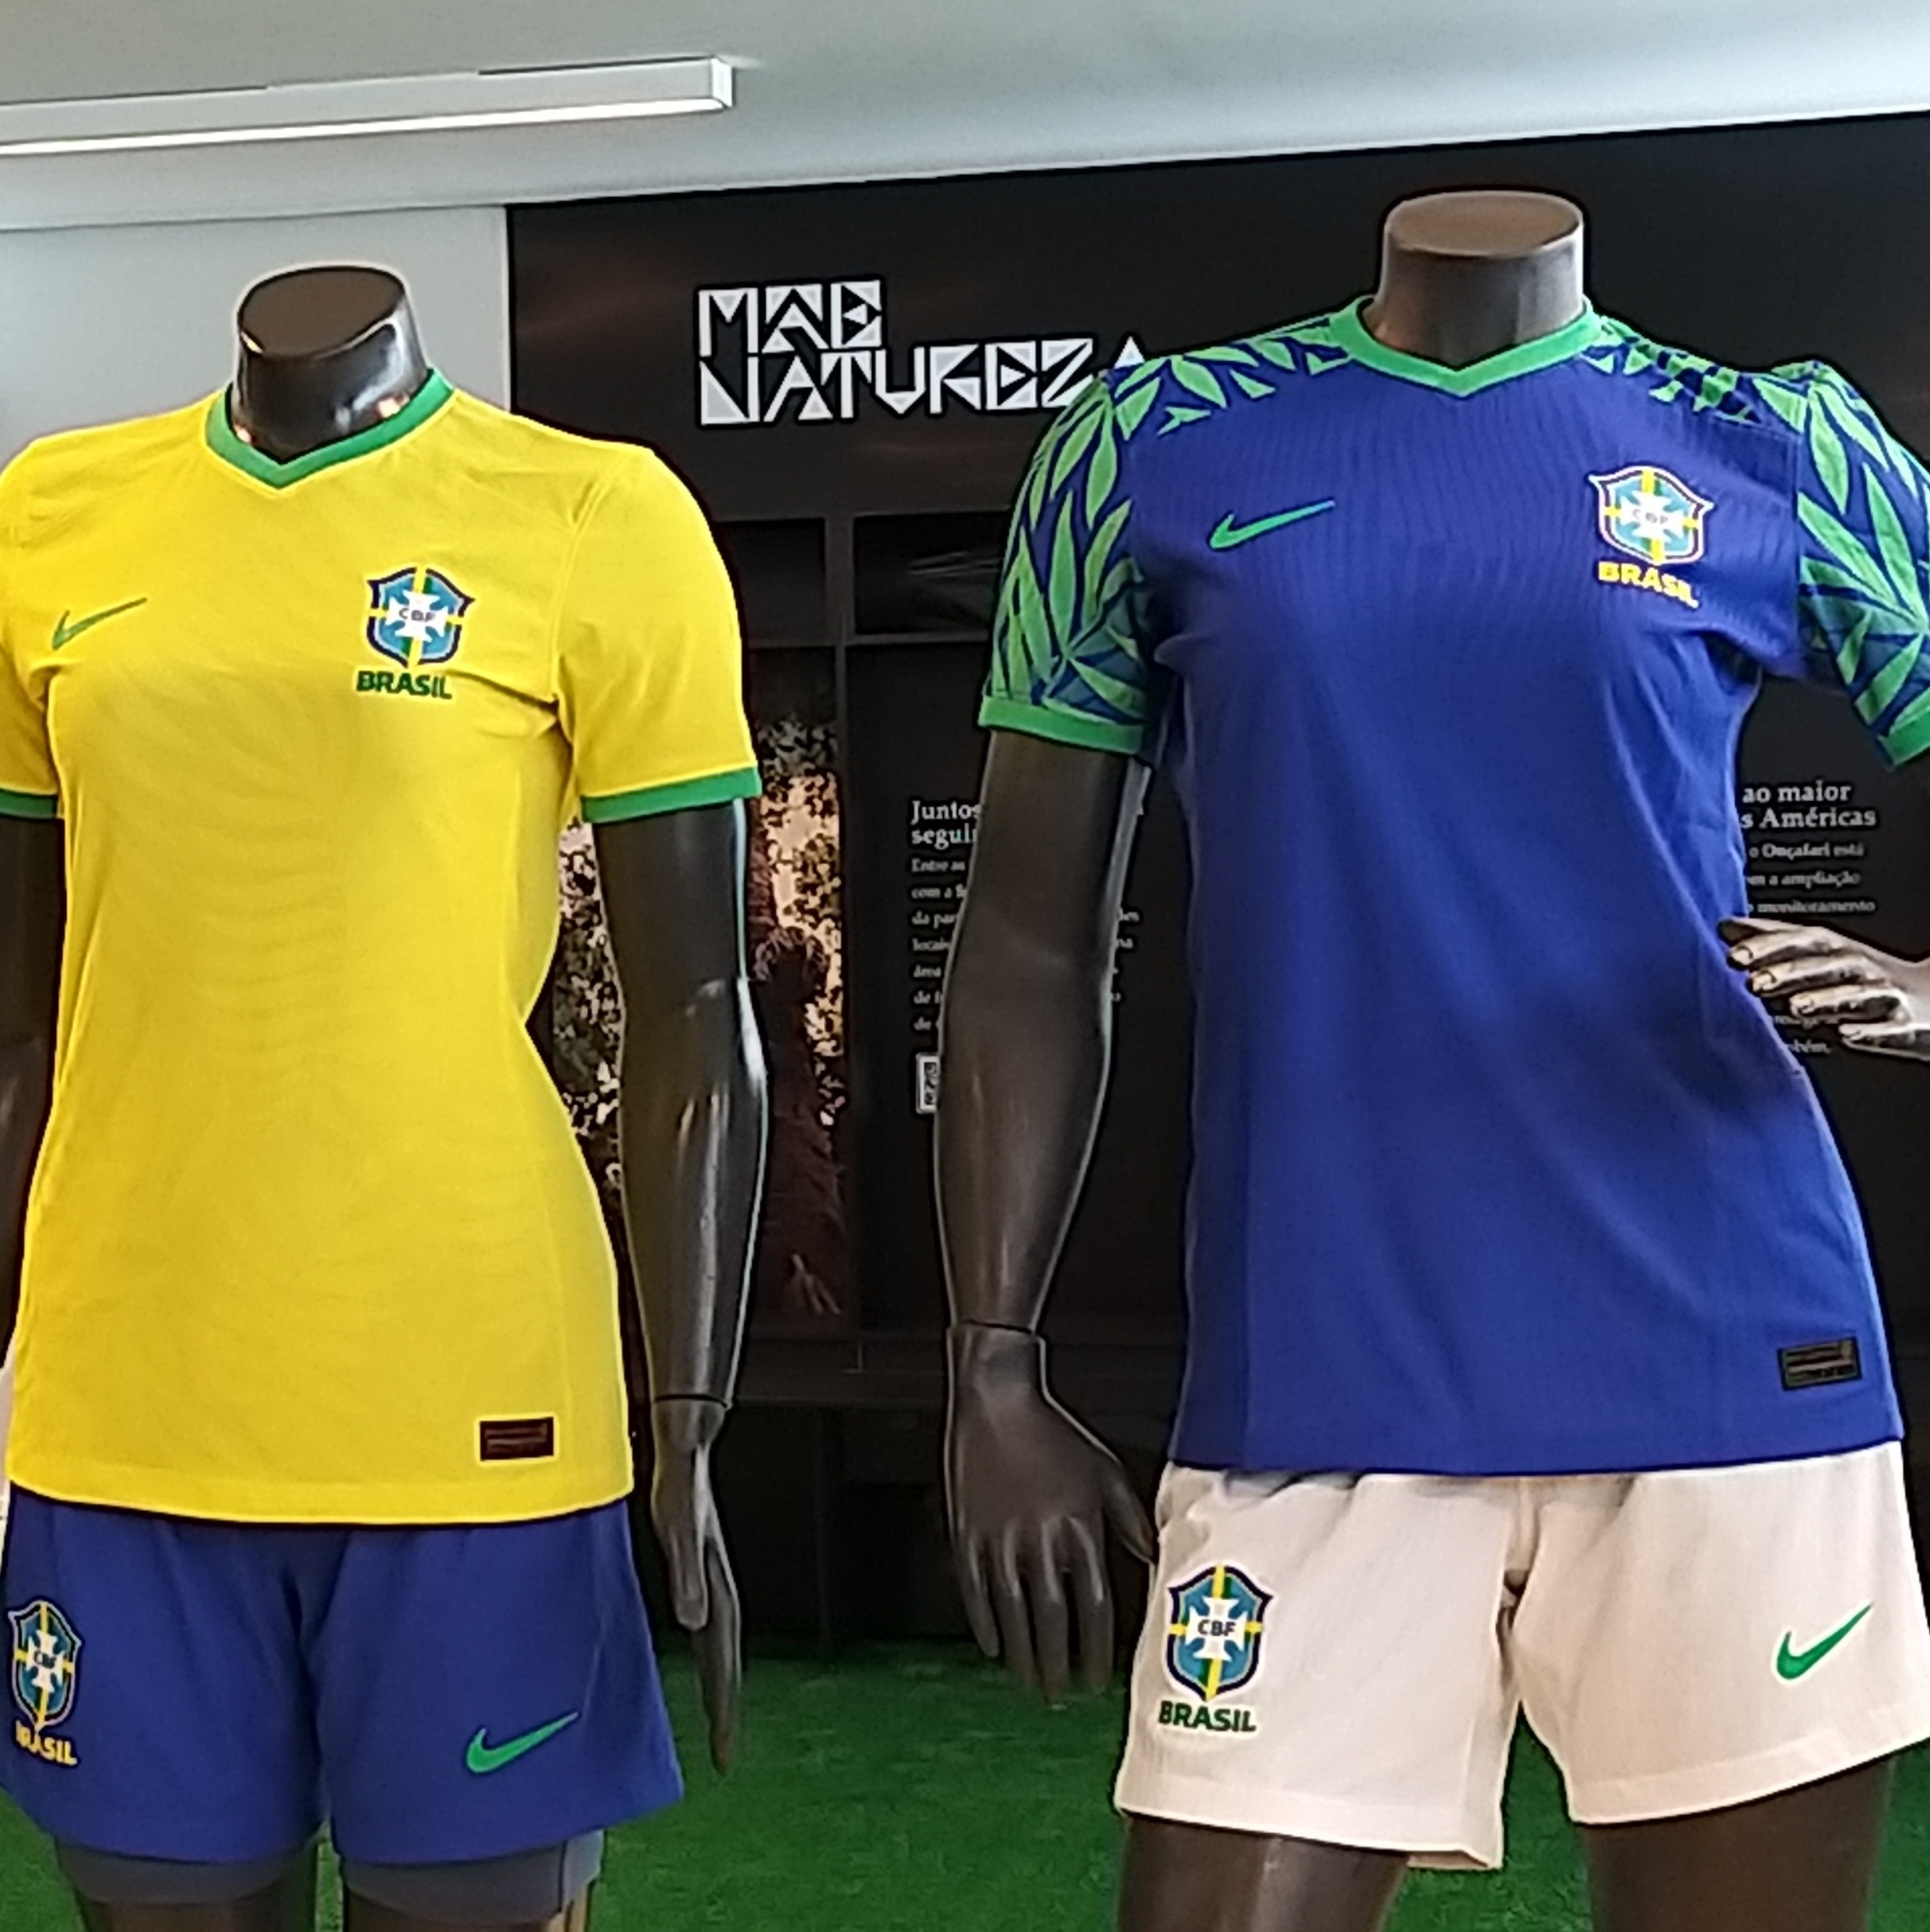 Camiseta Seleção Brasileira Branca / Camisa Brasil Folha Branca